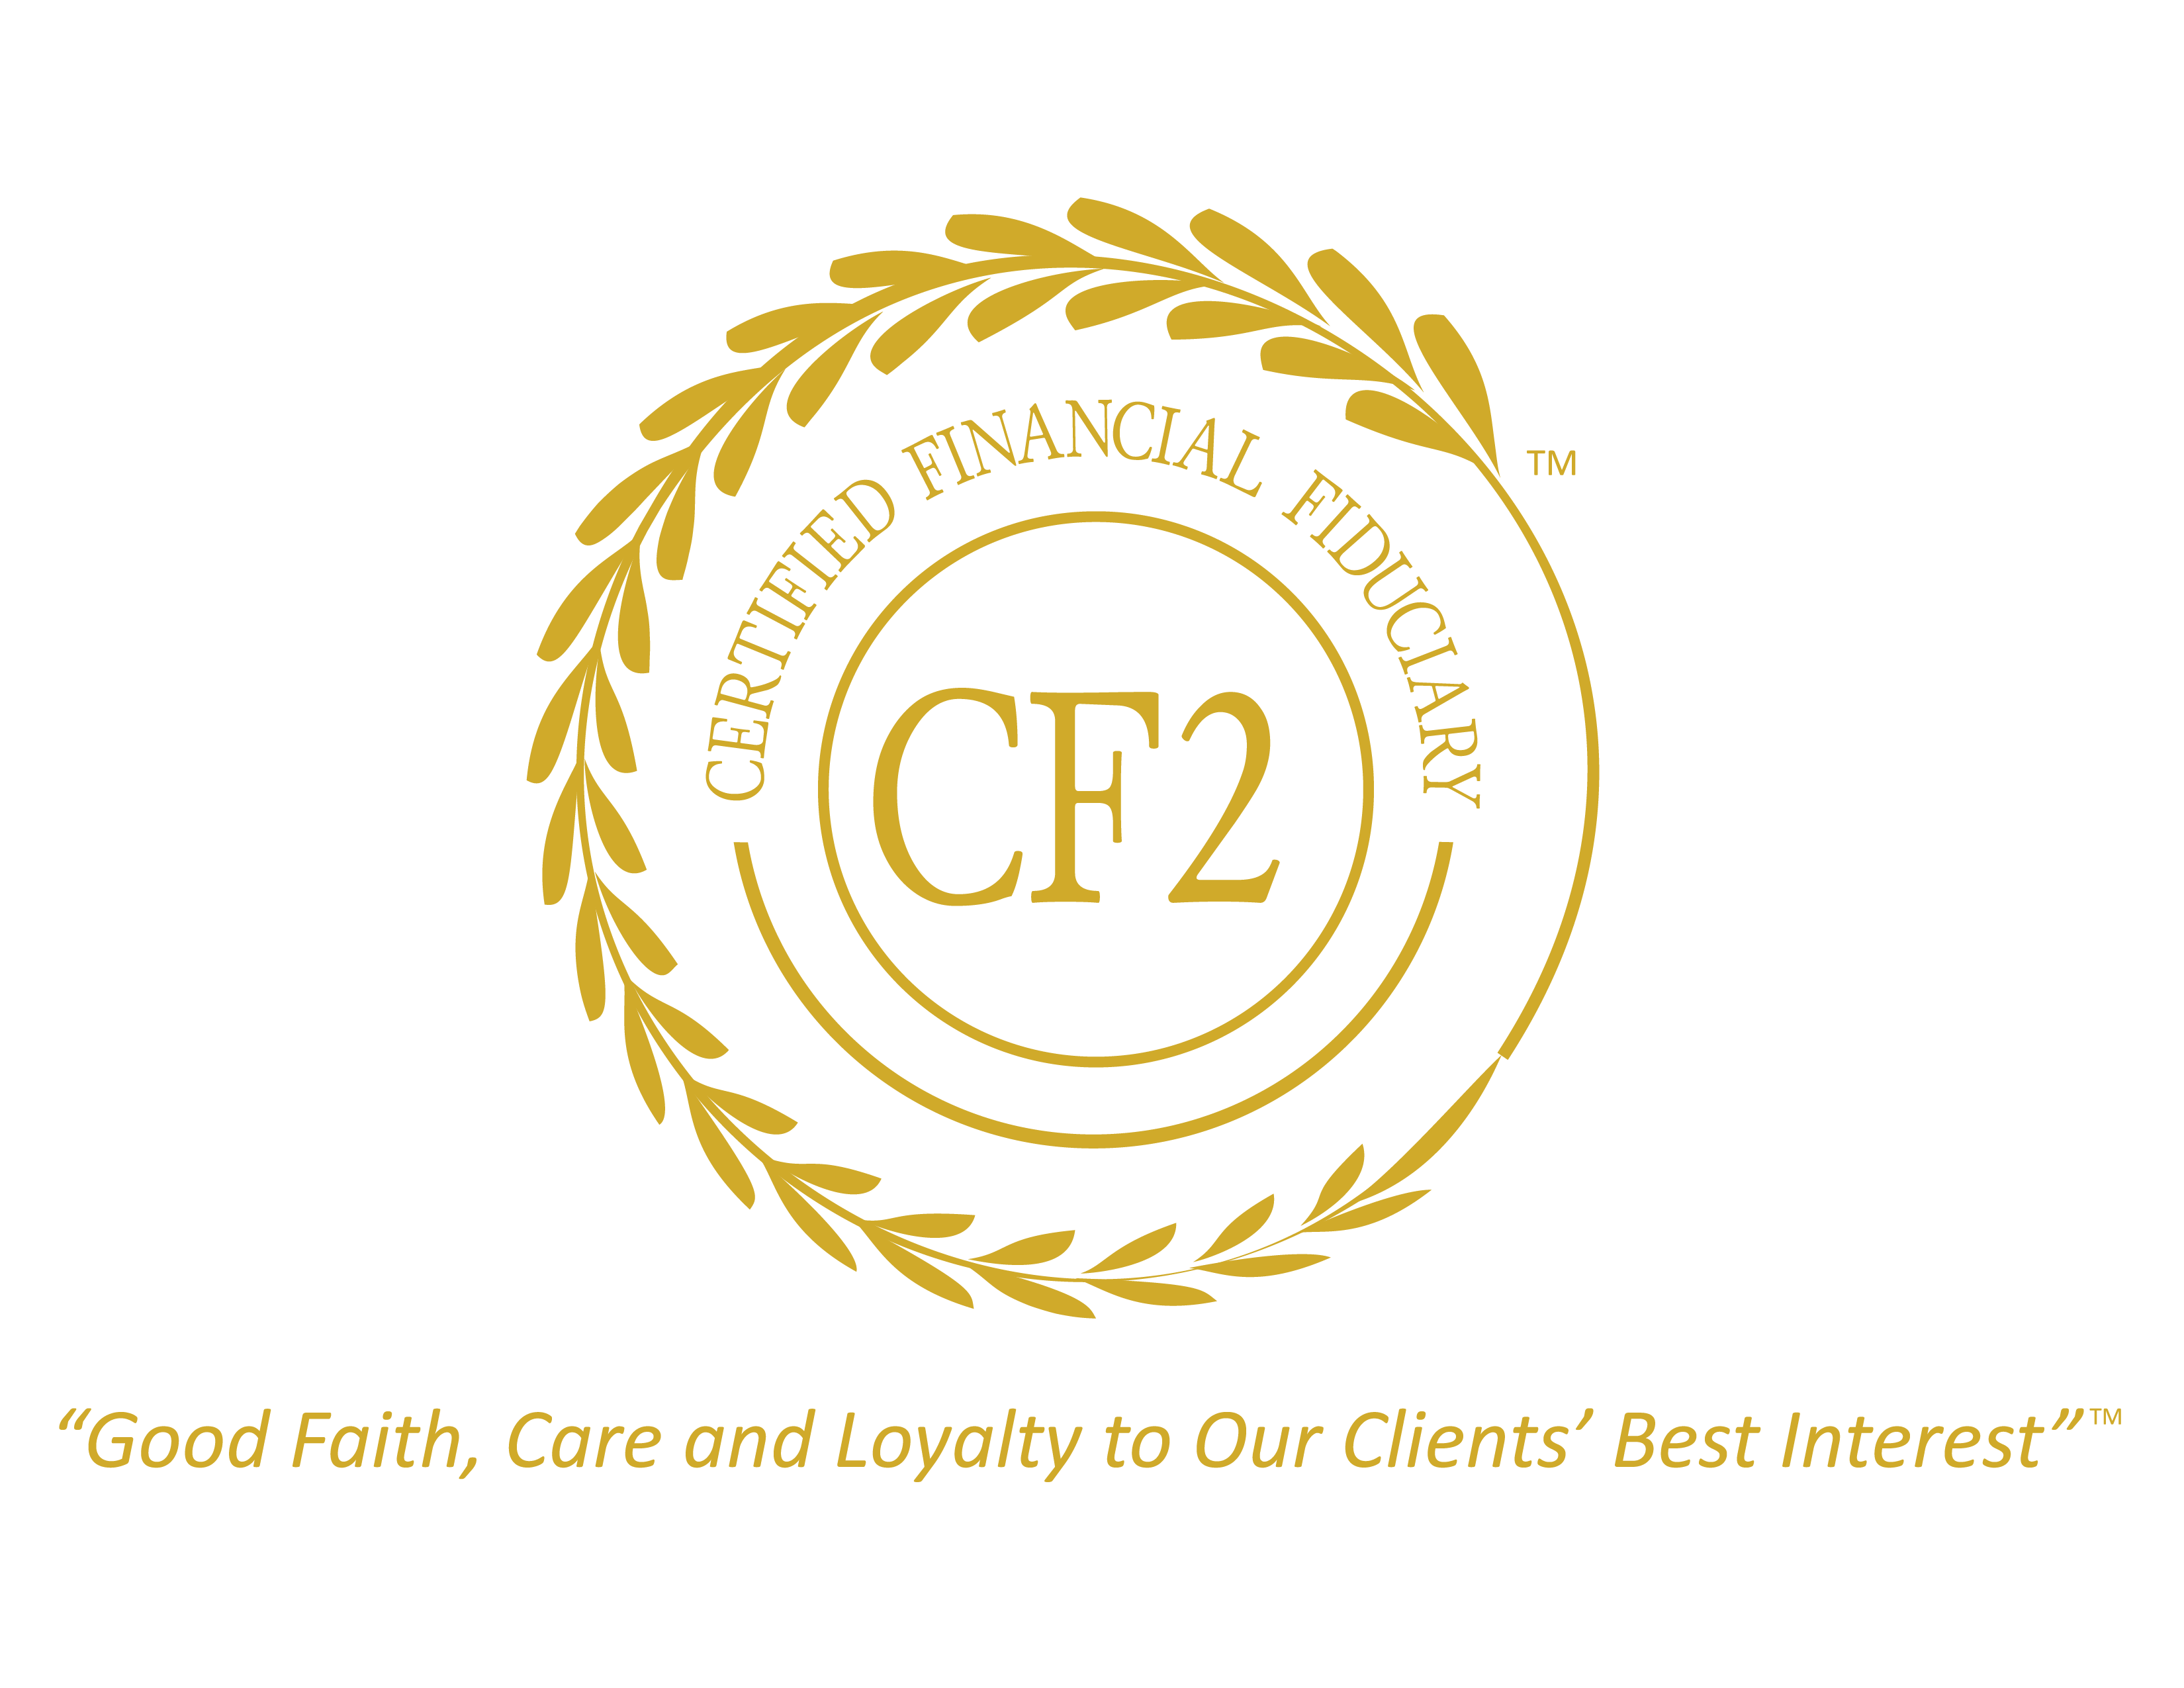 New CF2 Logo v2